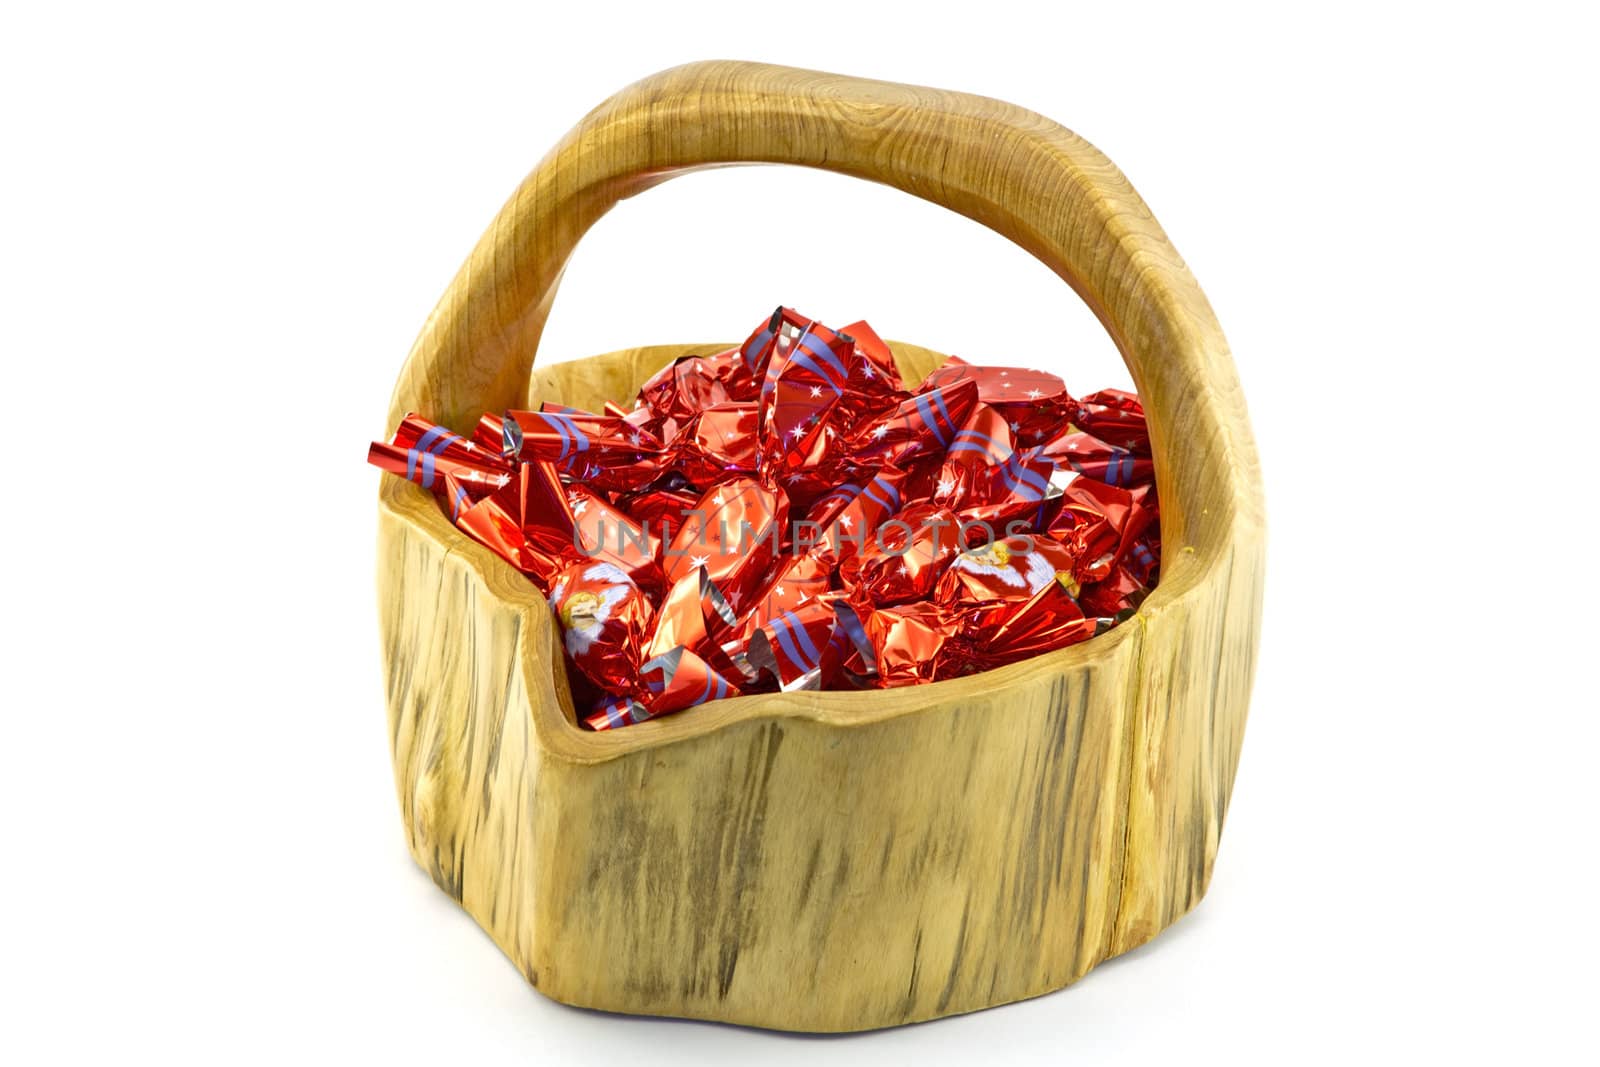 A basket of christmas pralines by renegadewanderer